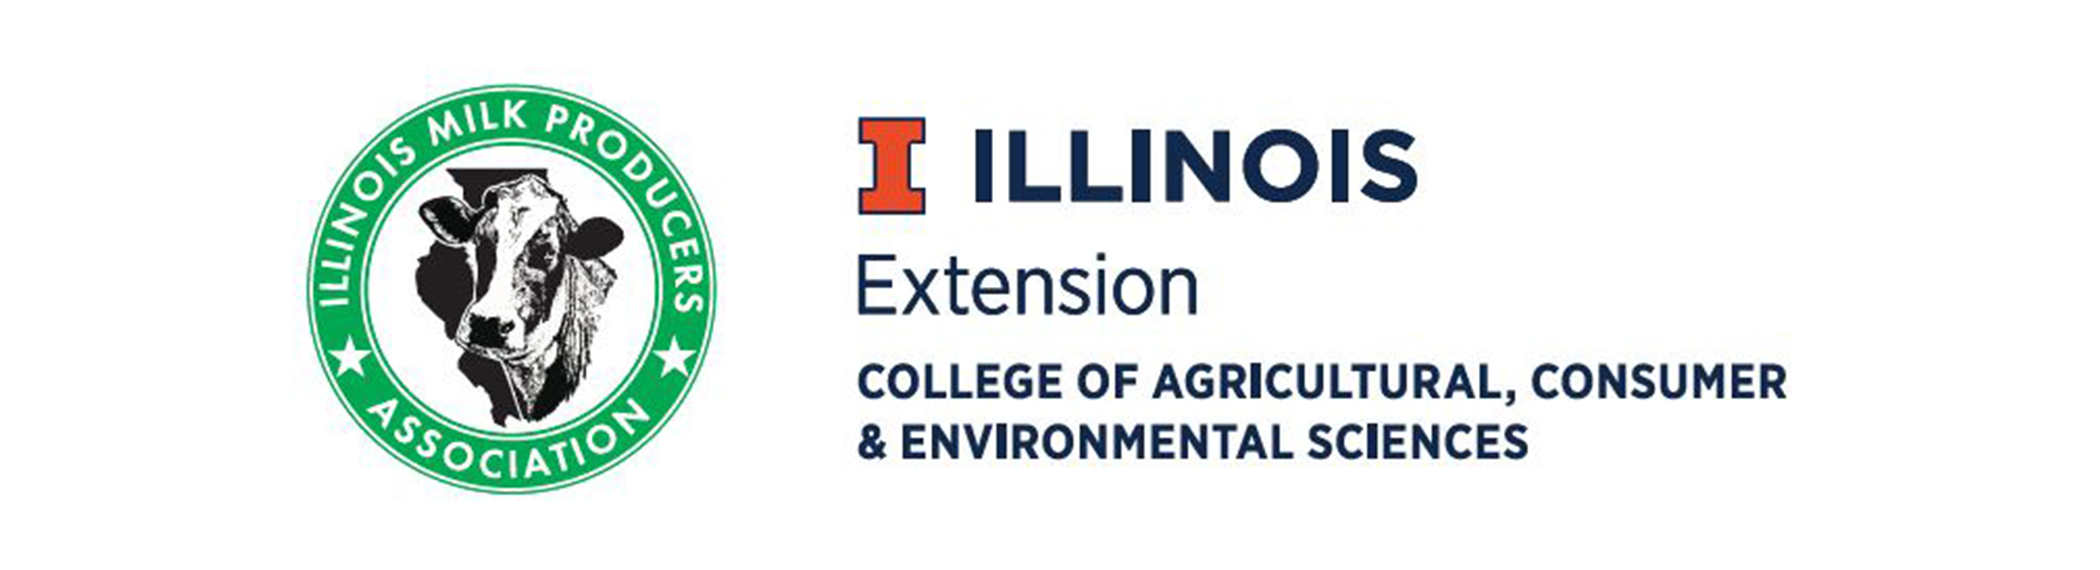 IMPA & University of Illinois Dairy Extension